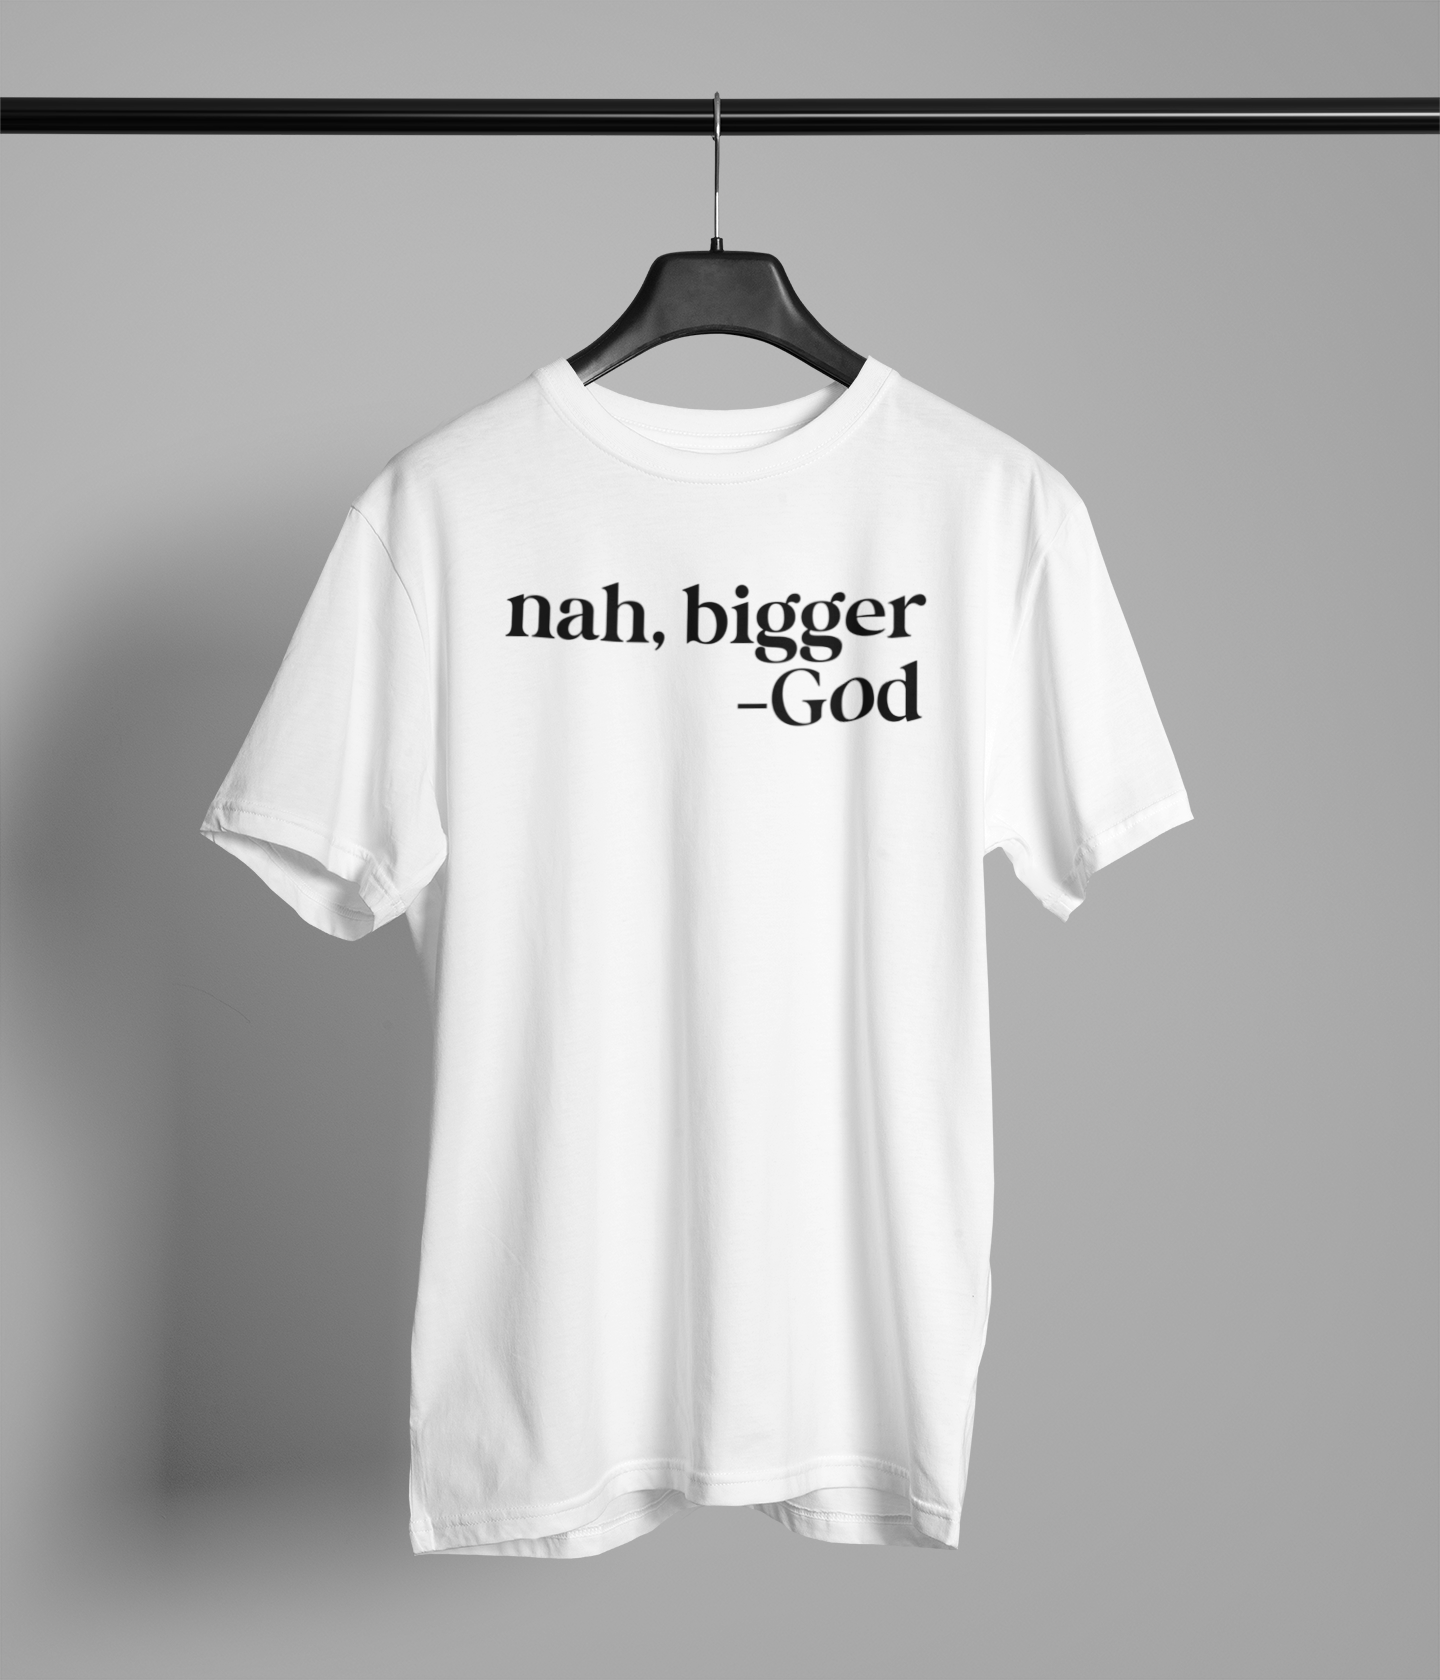 nah, bigger -God T-Shirt